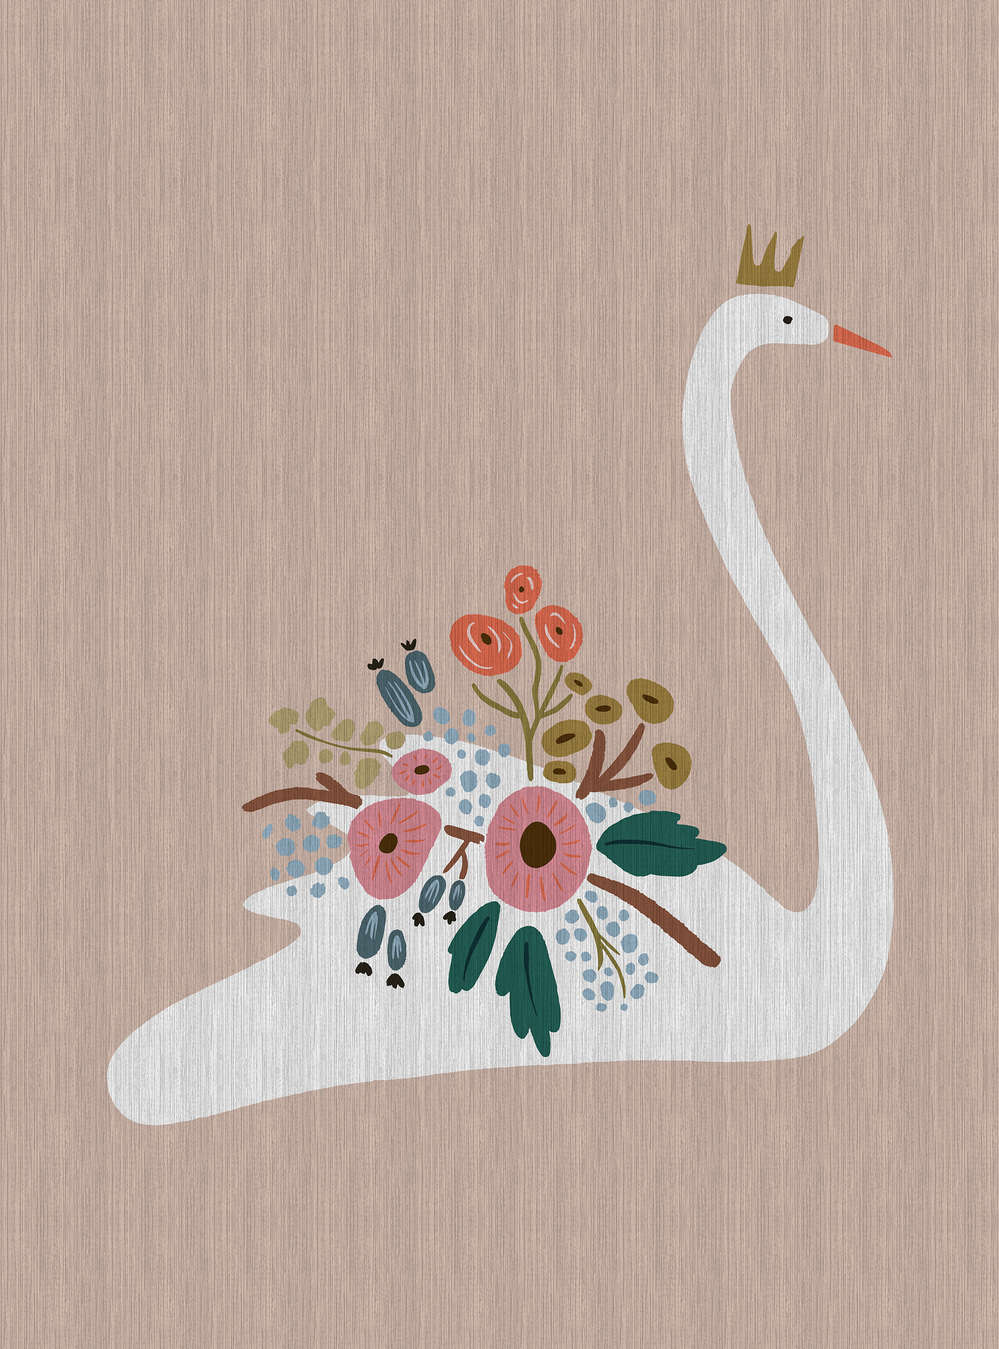             Up North 1 - photo wallpaper Scandinavian design swan & flowers
        